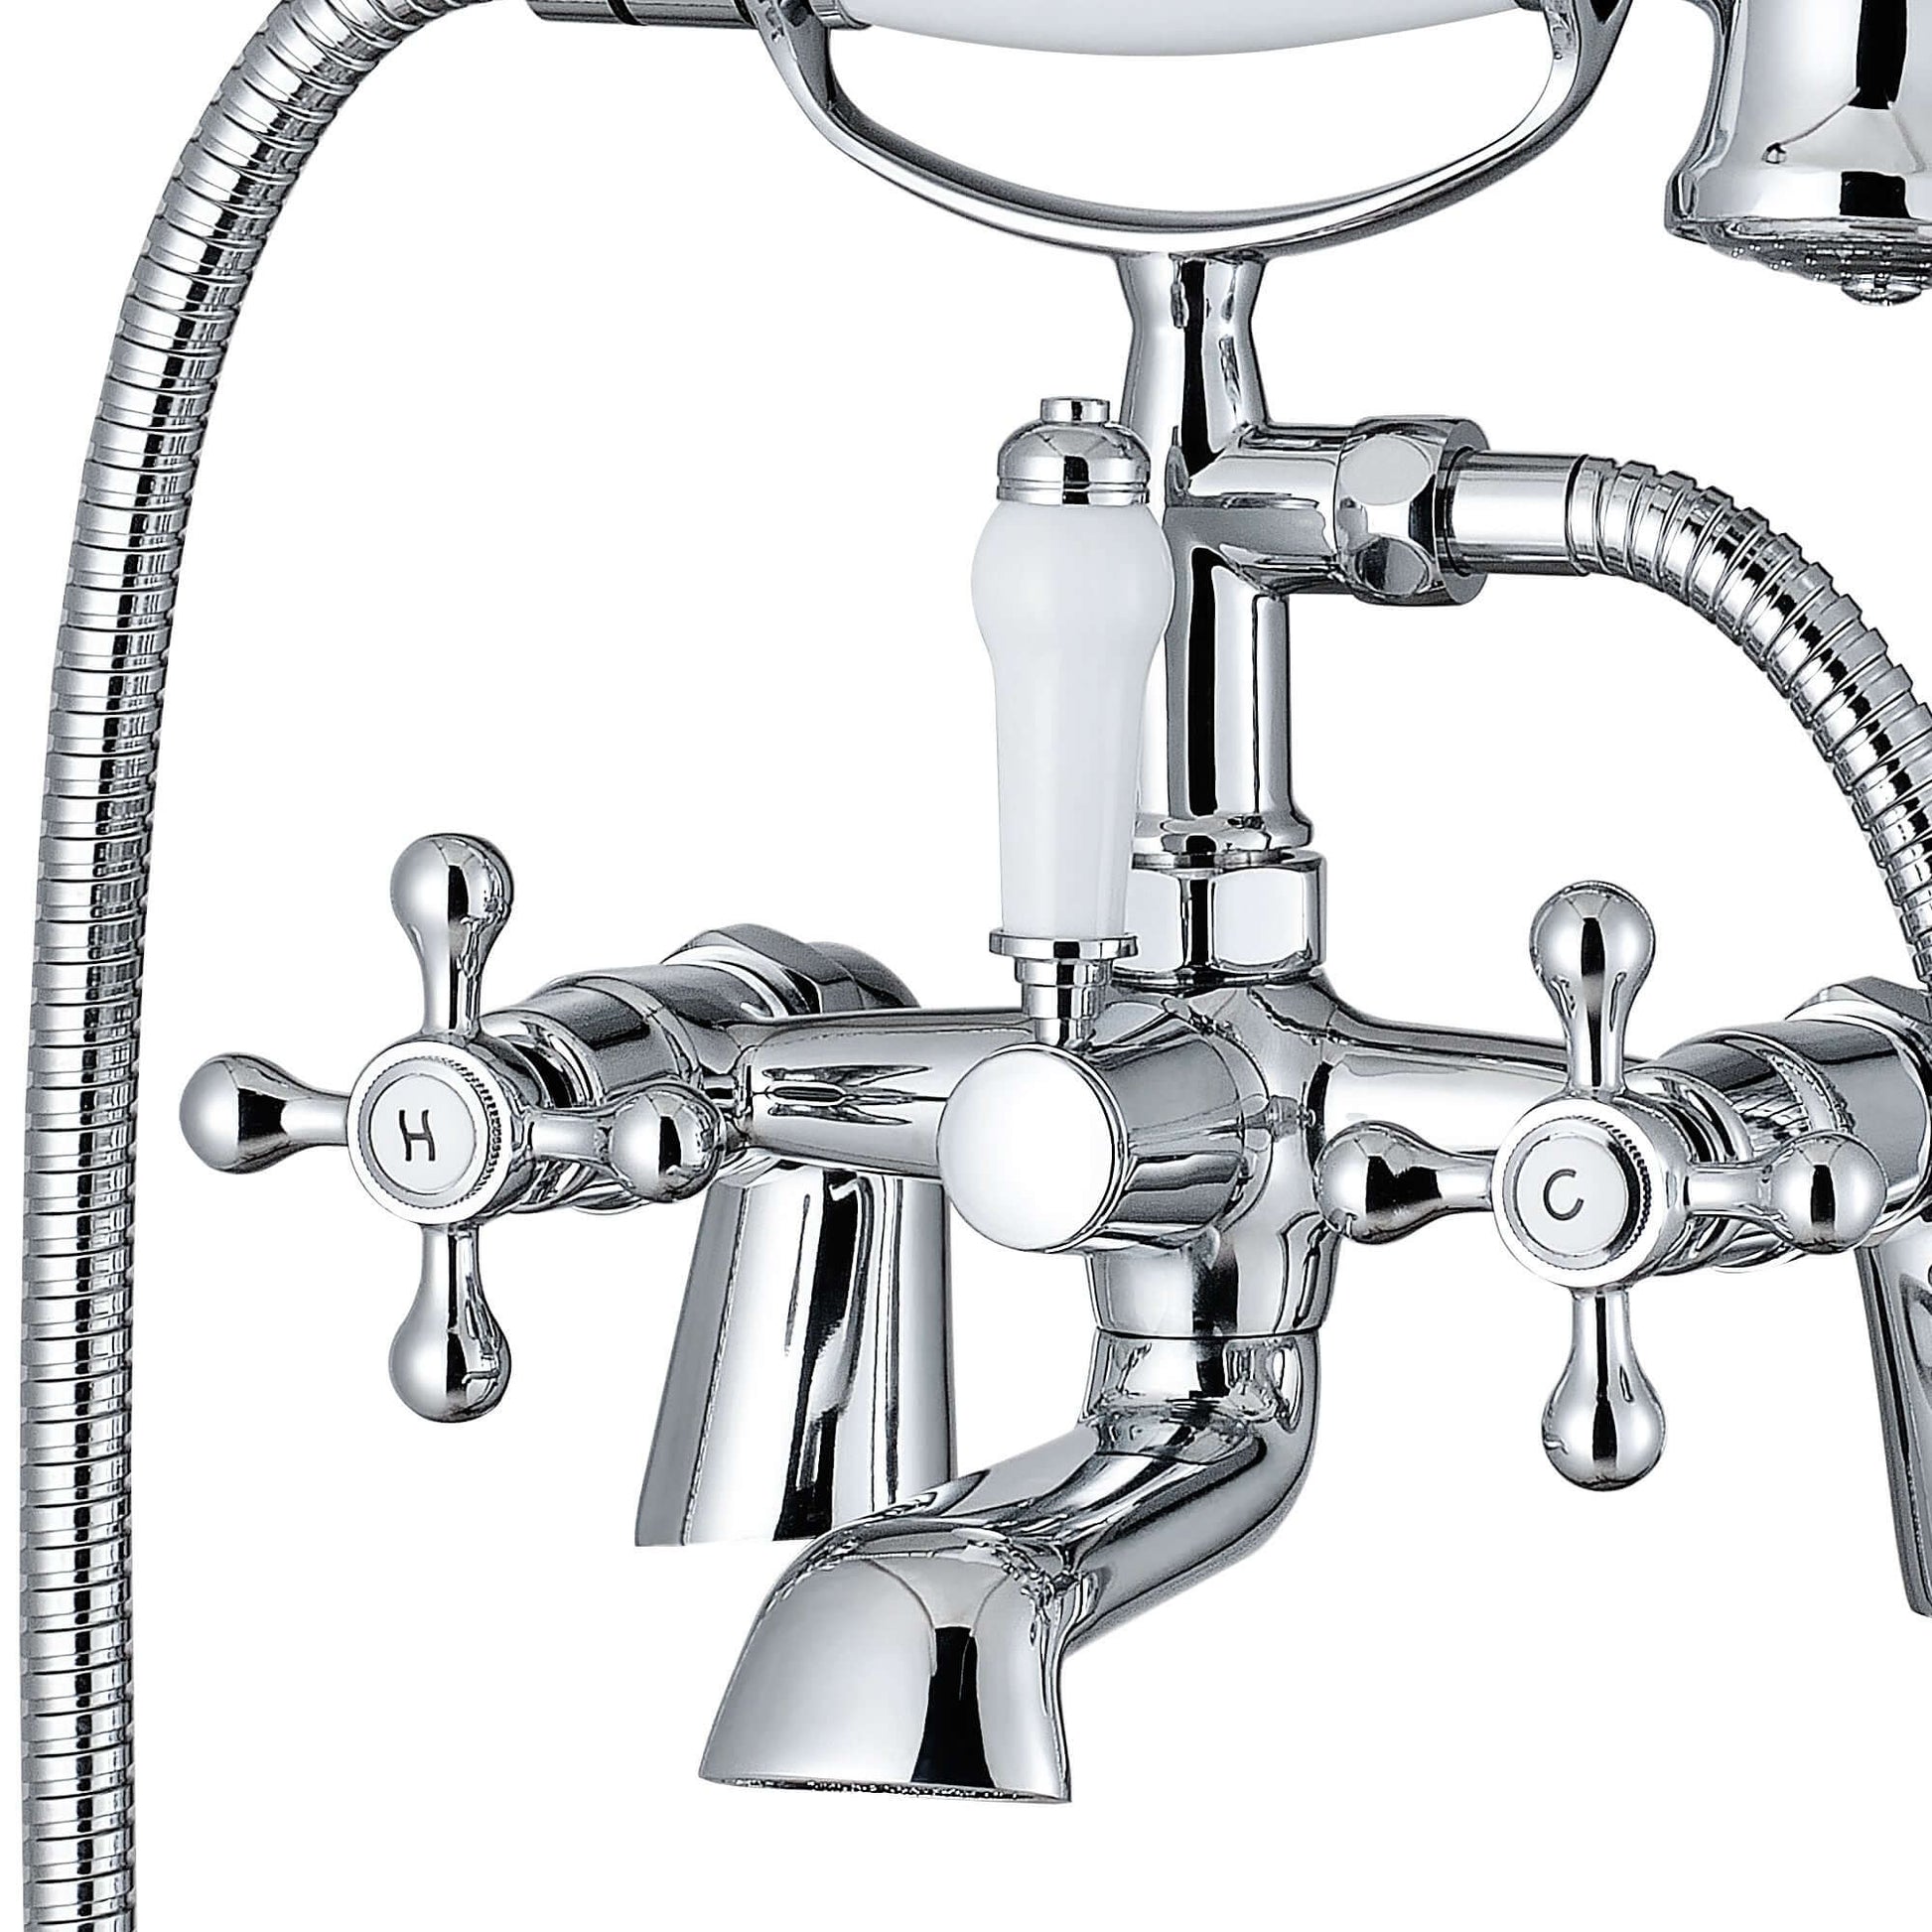 Beaumont traditional bath shower mixer tap crosshead - chrome - Taps